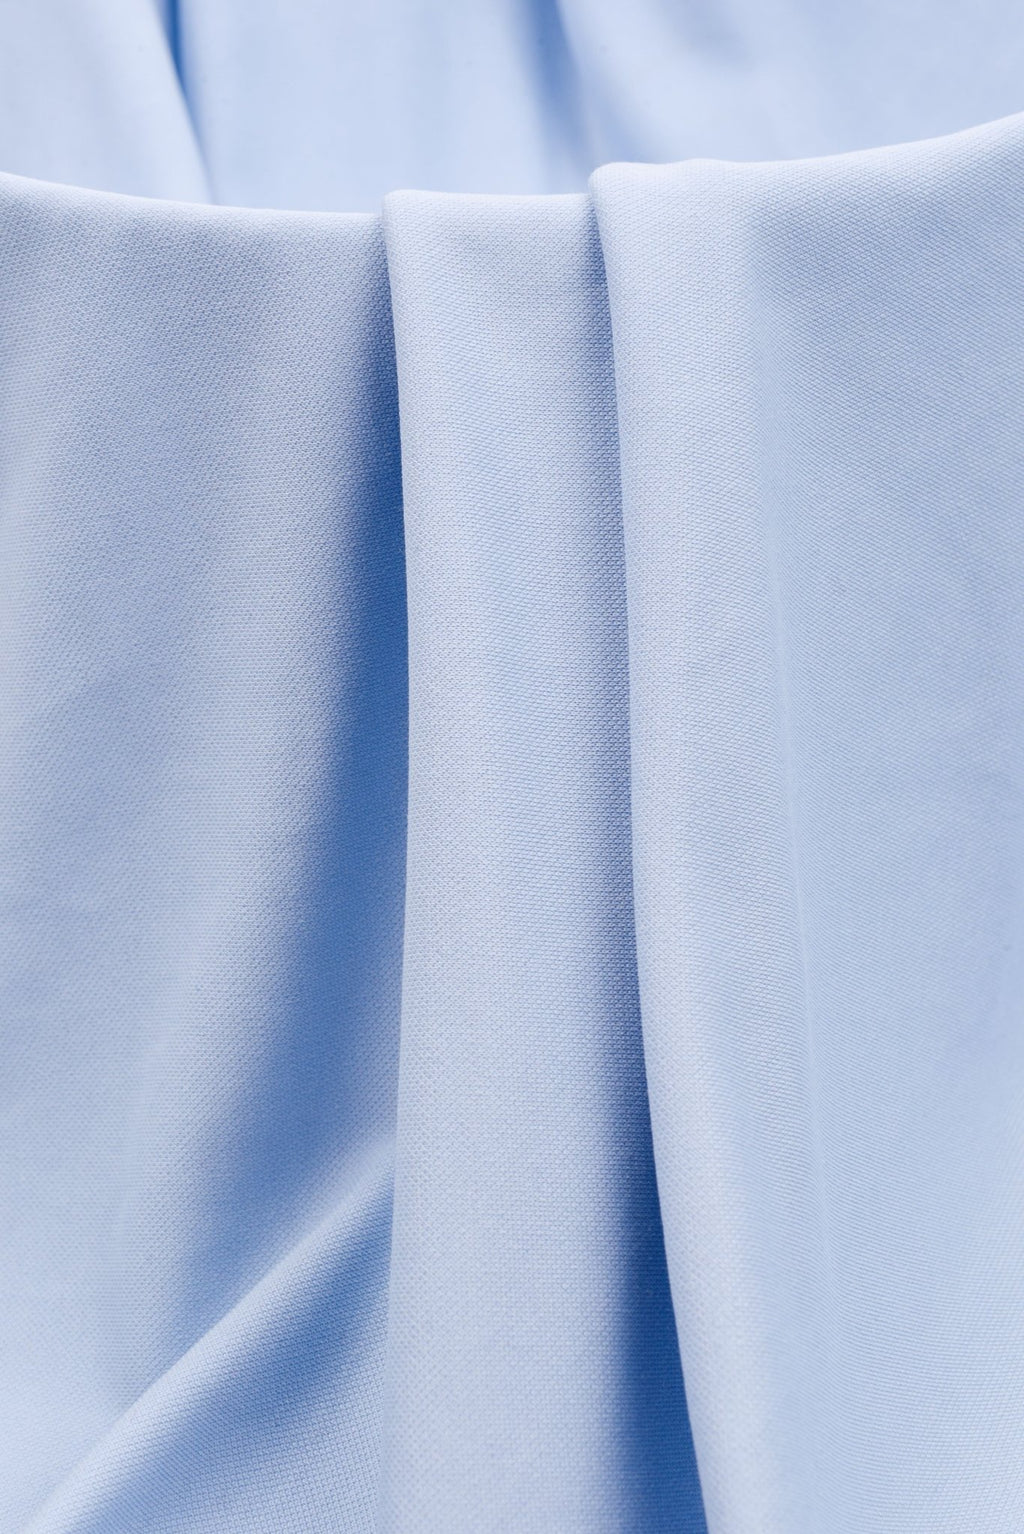 Modal Cotton Spandex Fabric Jersey Knit by the Yard Scuba Blue -   Denmark